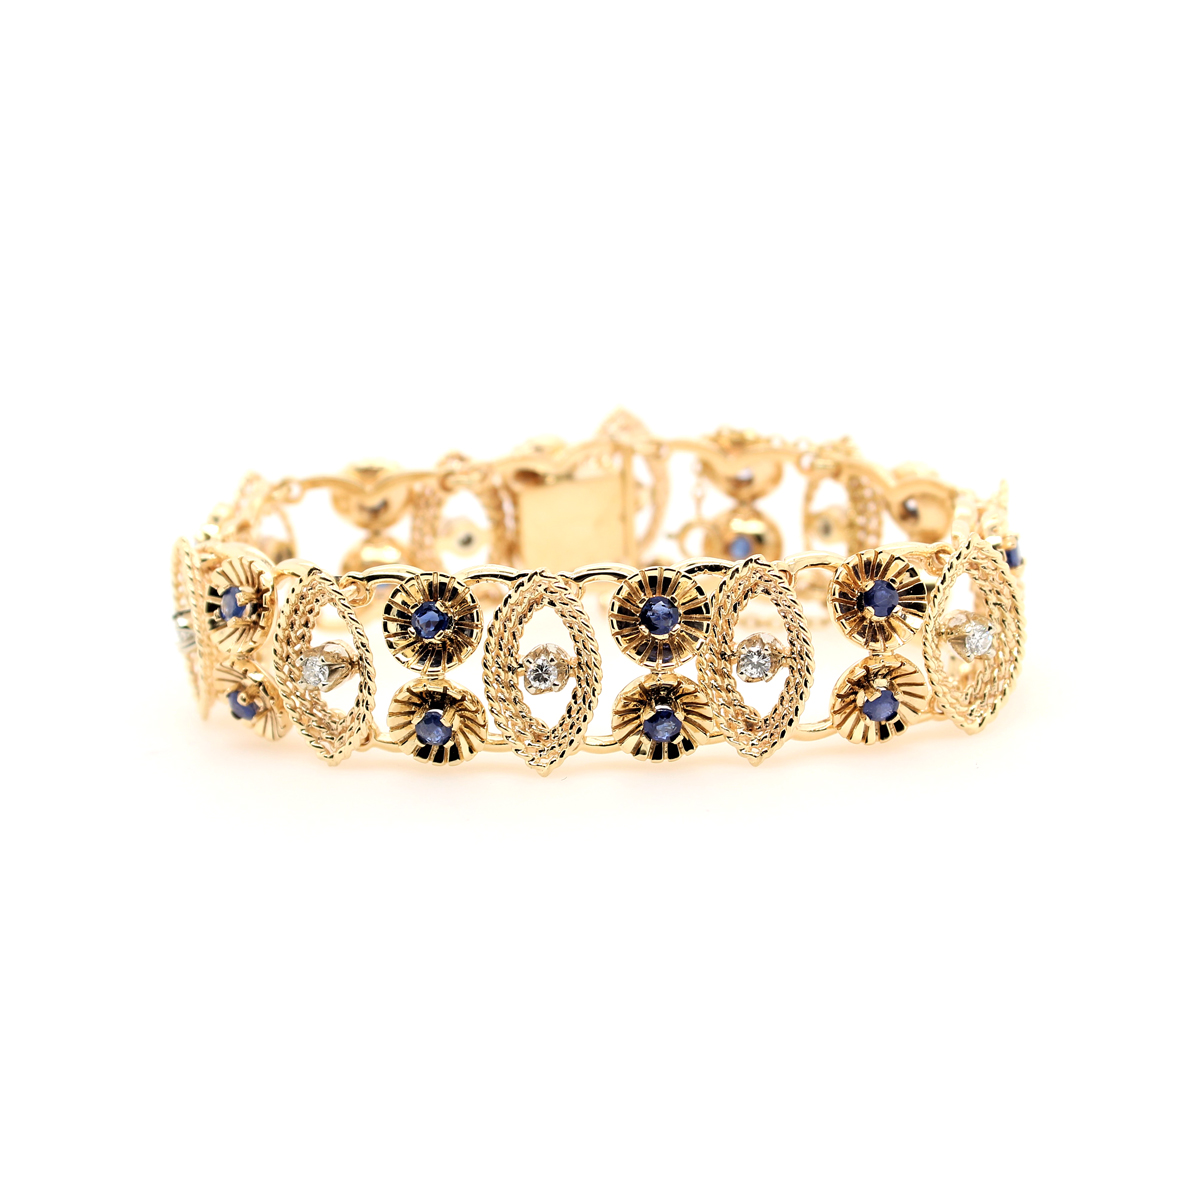 Vintage 14 Karat Yellow Gold Diamond and Blue Sapphire Link Bracelet